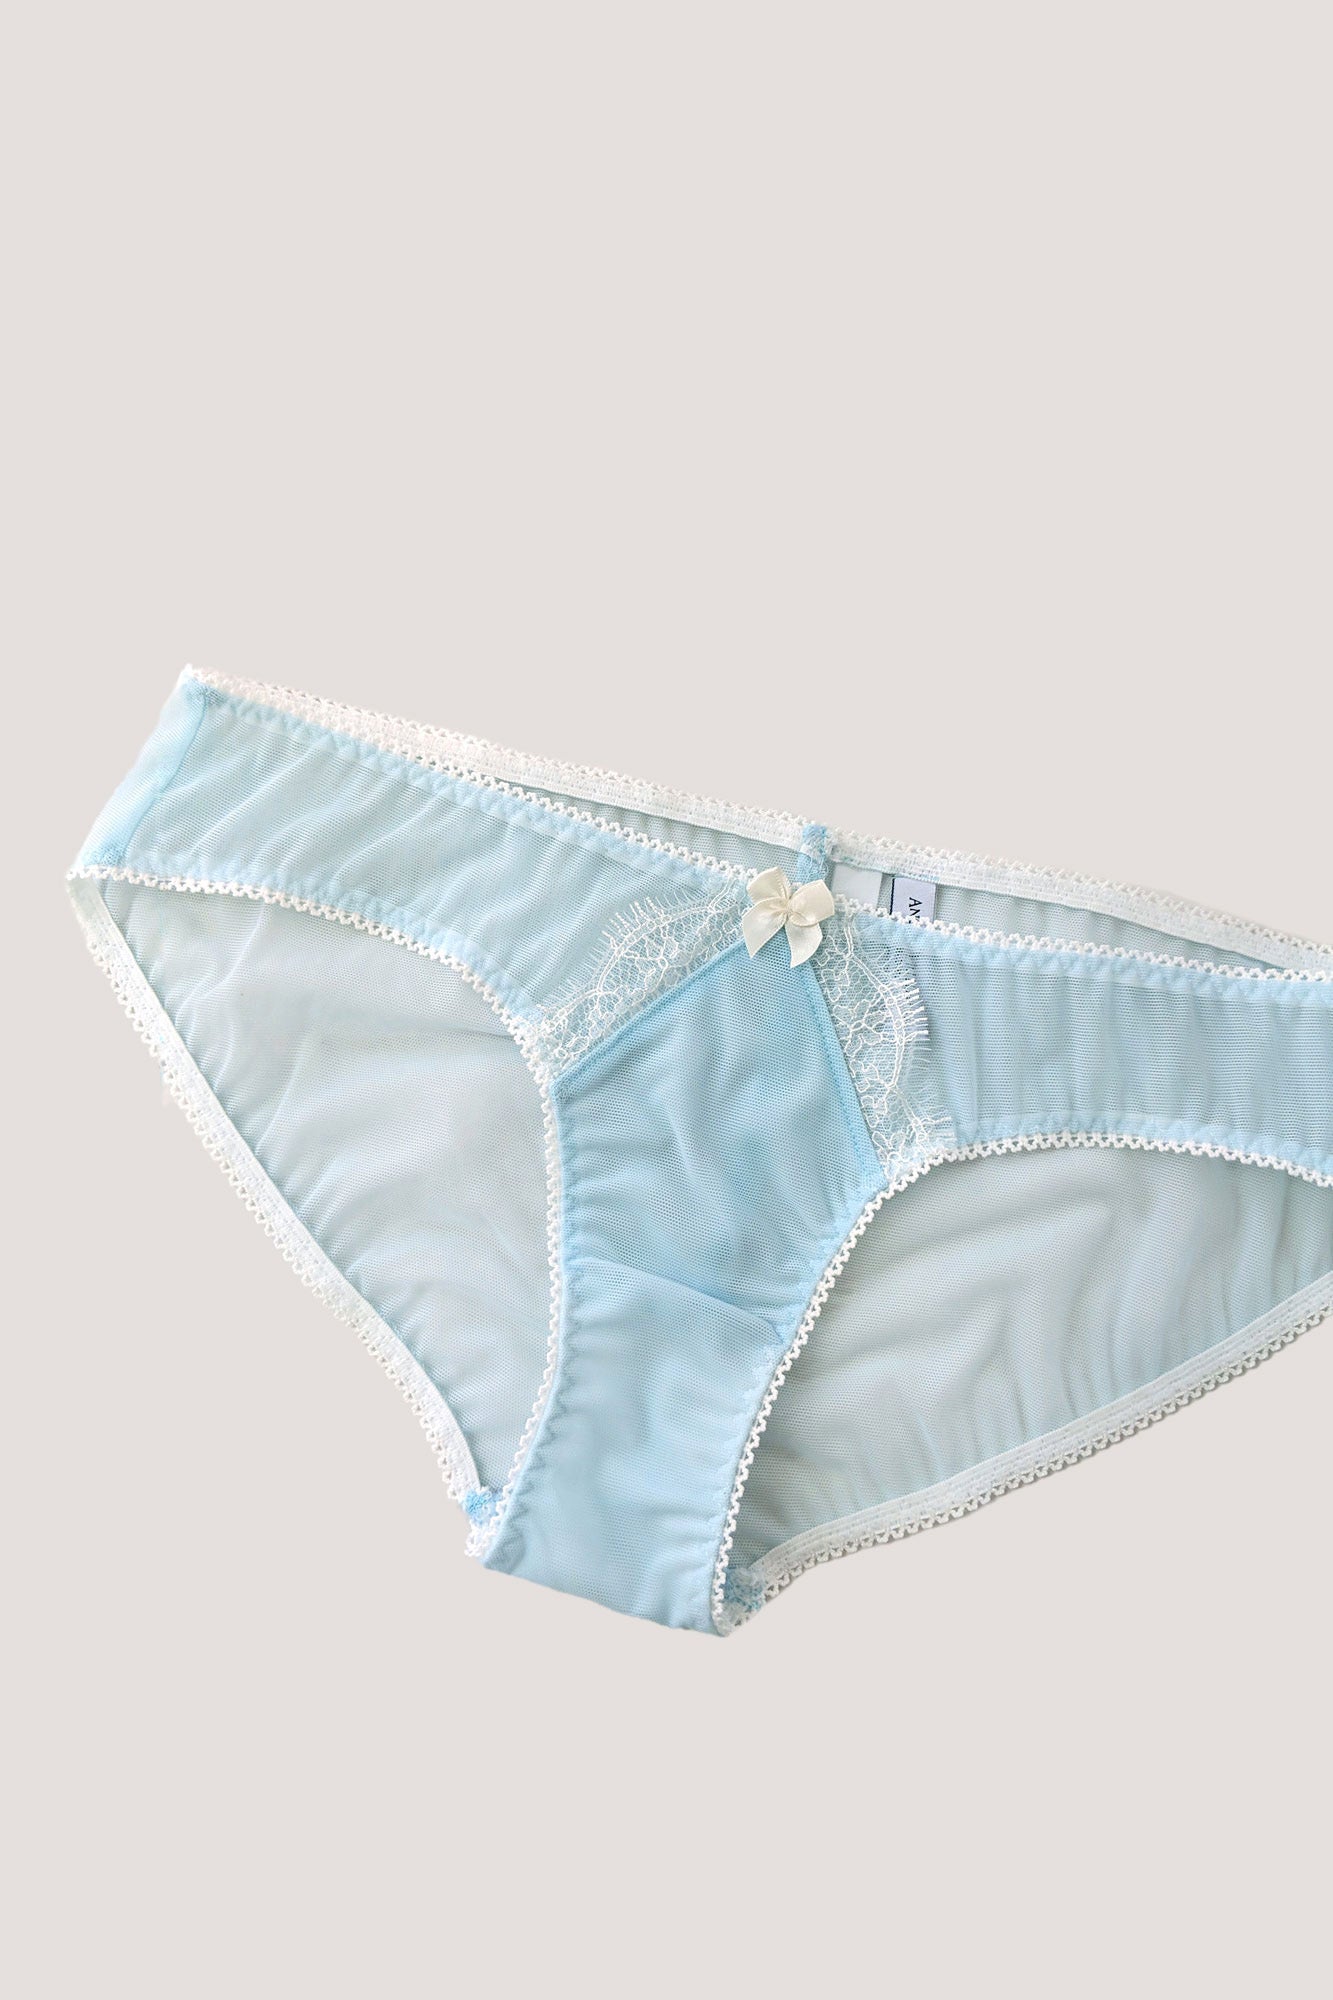 Wedding underwear set with blue mesh panties